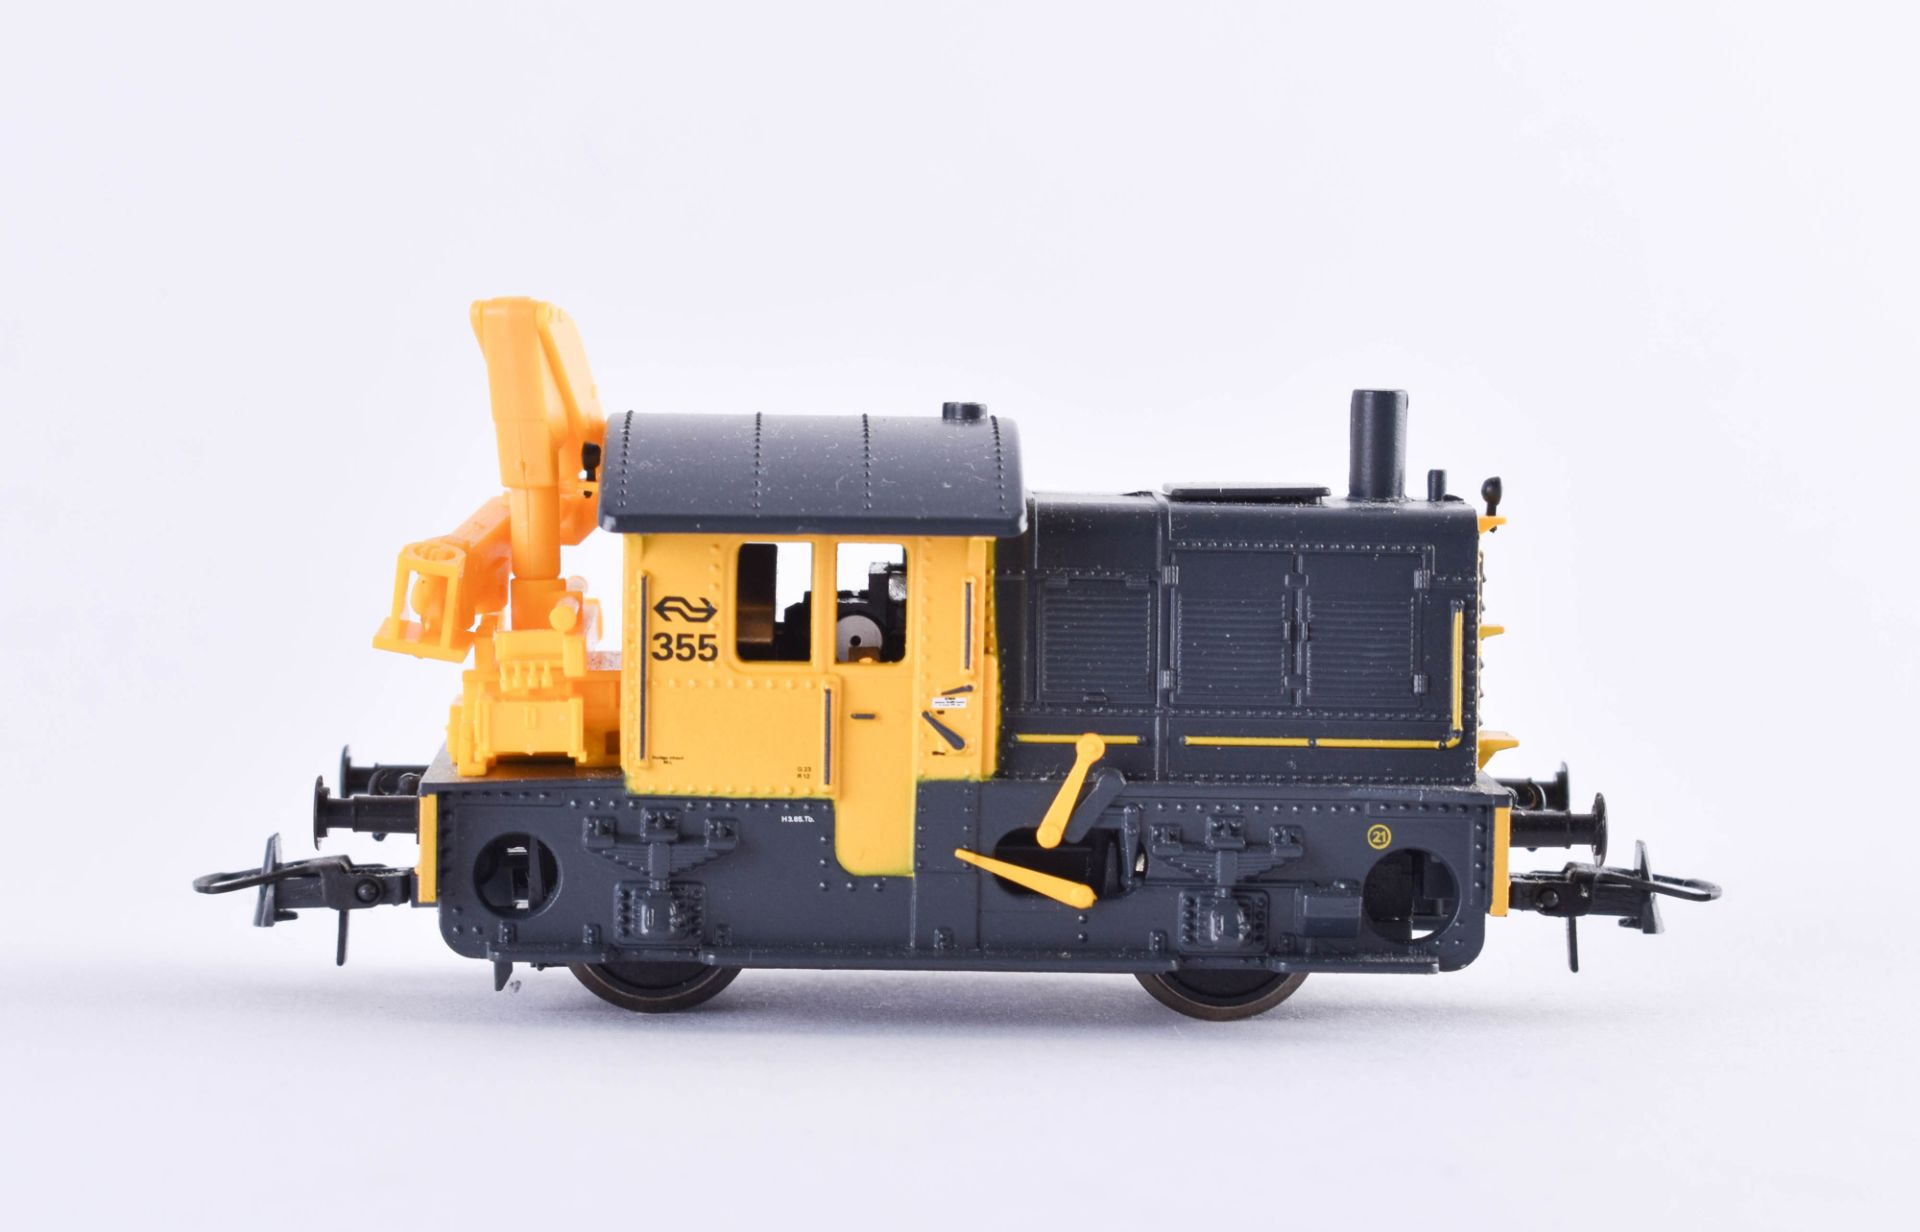 Diesel locomotive 62959 A Series 200/300 - Roco